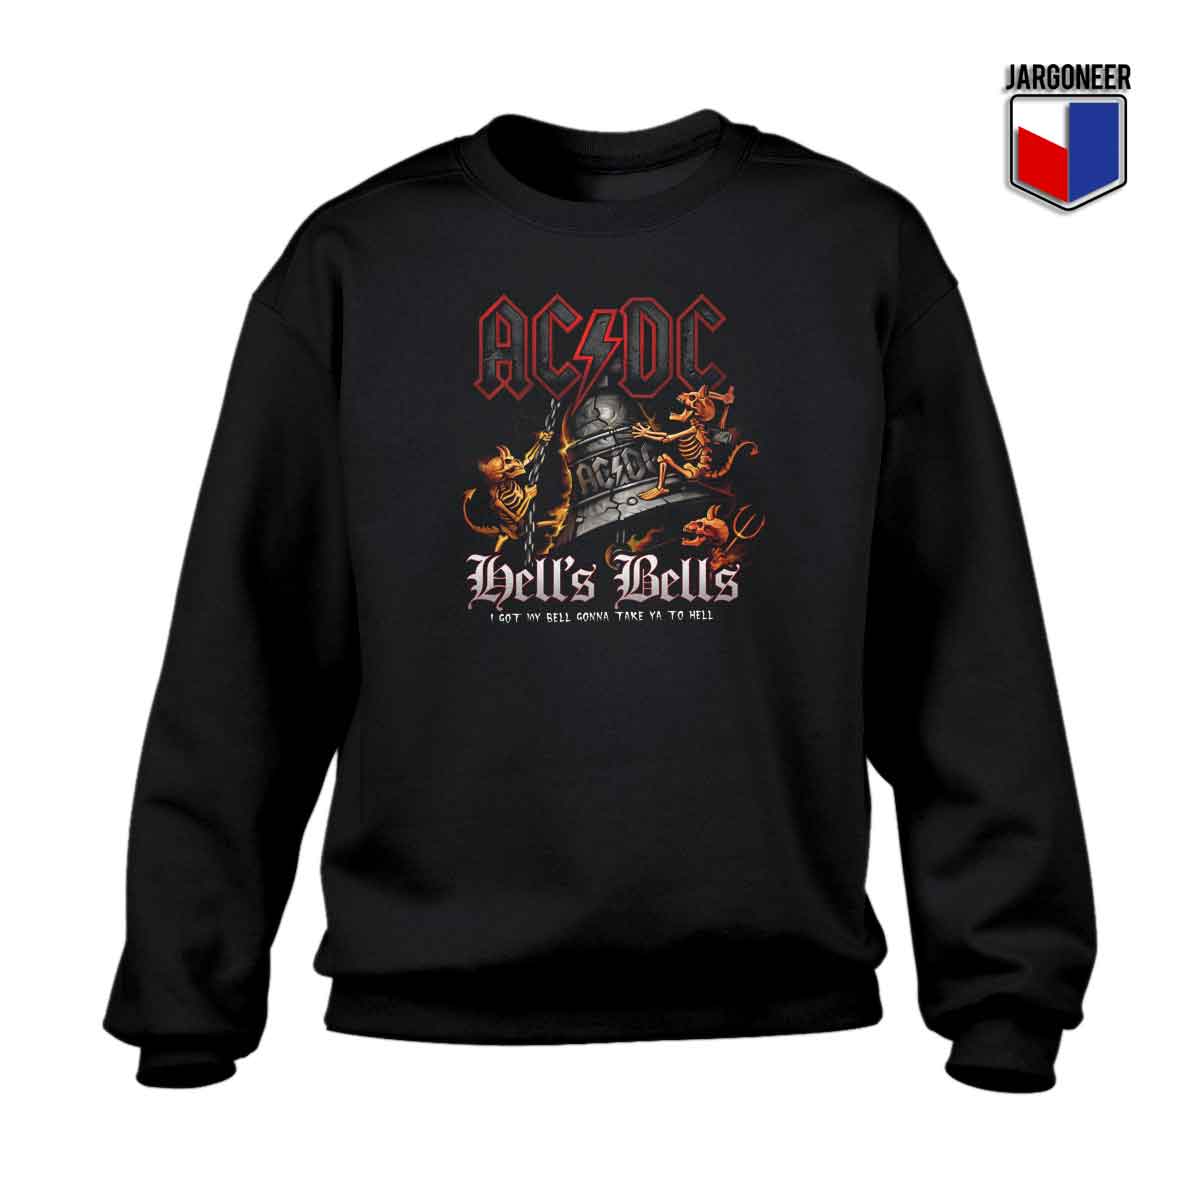 ACDC Hells Bells 2 - Shop Unique Graphic Cool Shirt Designs